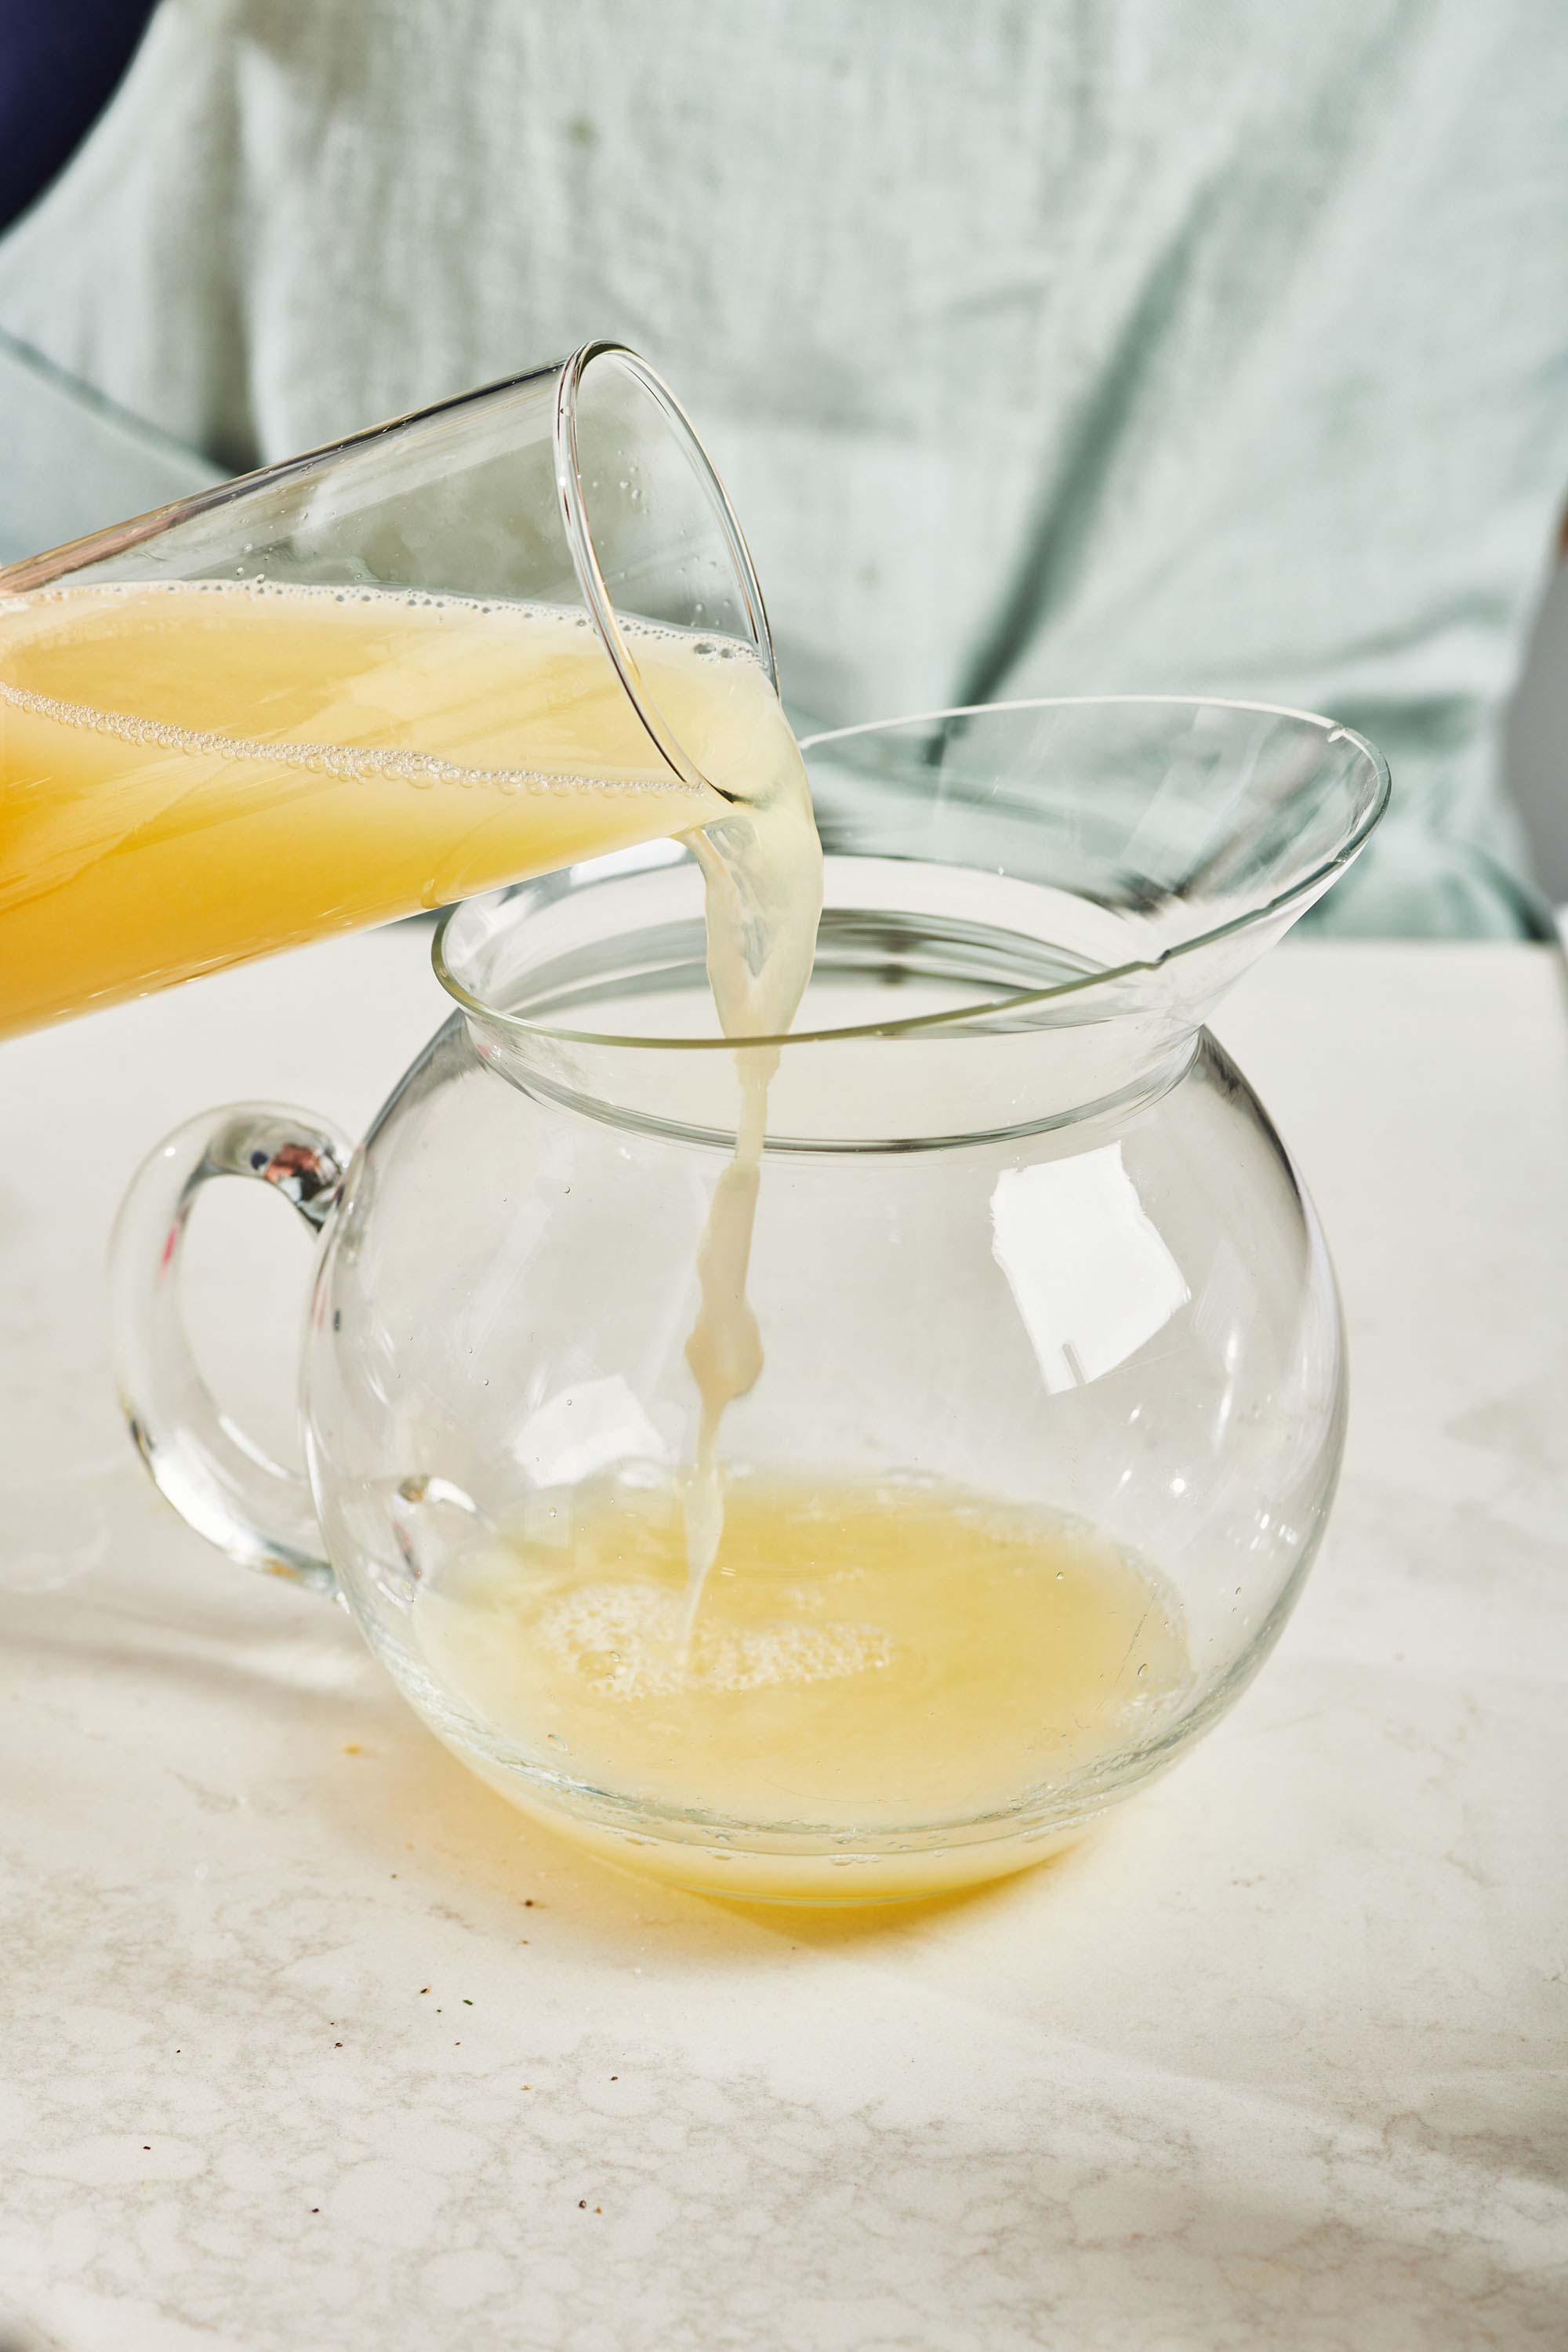 Fresh lemon juice pouring into a glass pitcher.